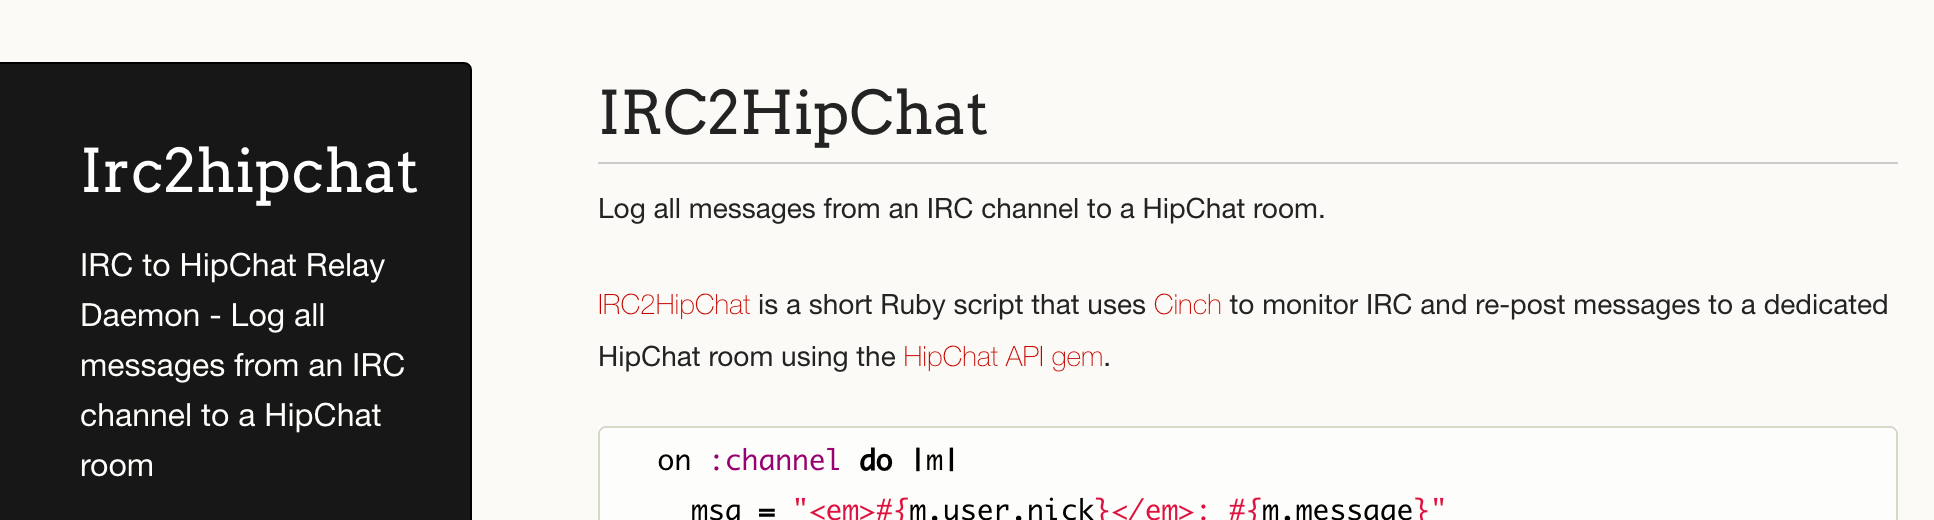 IRC2HipChat